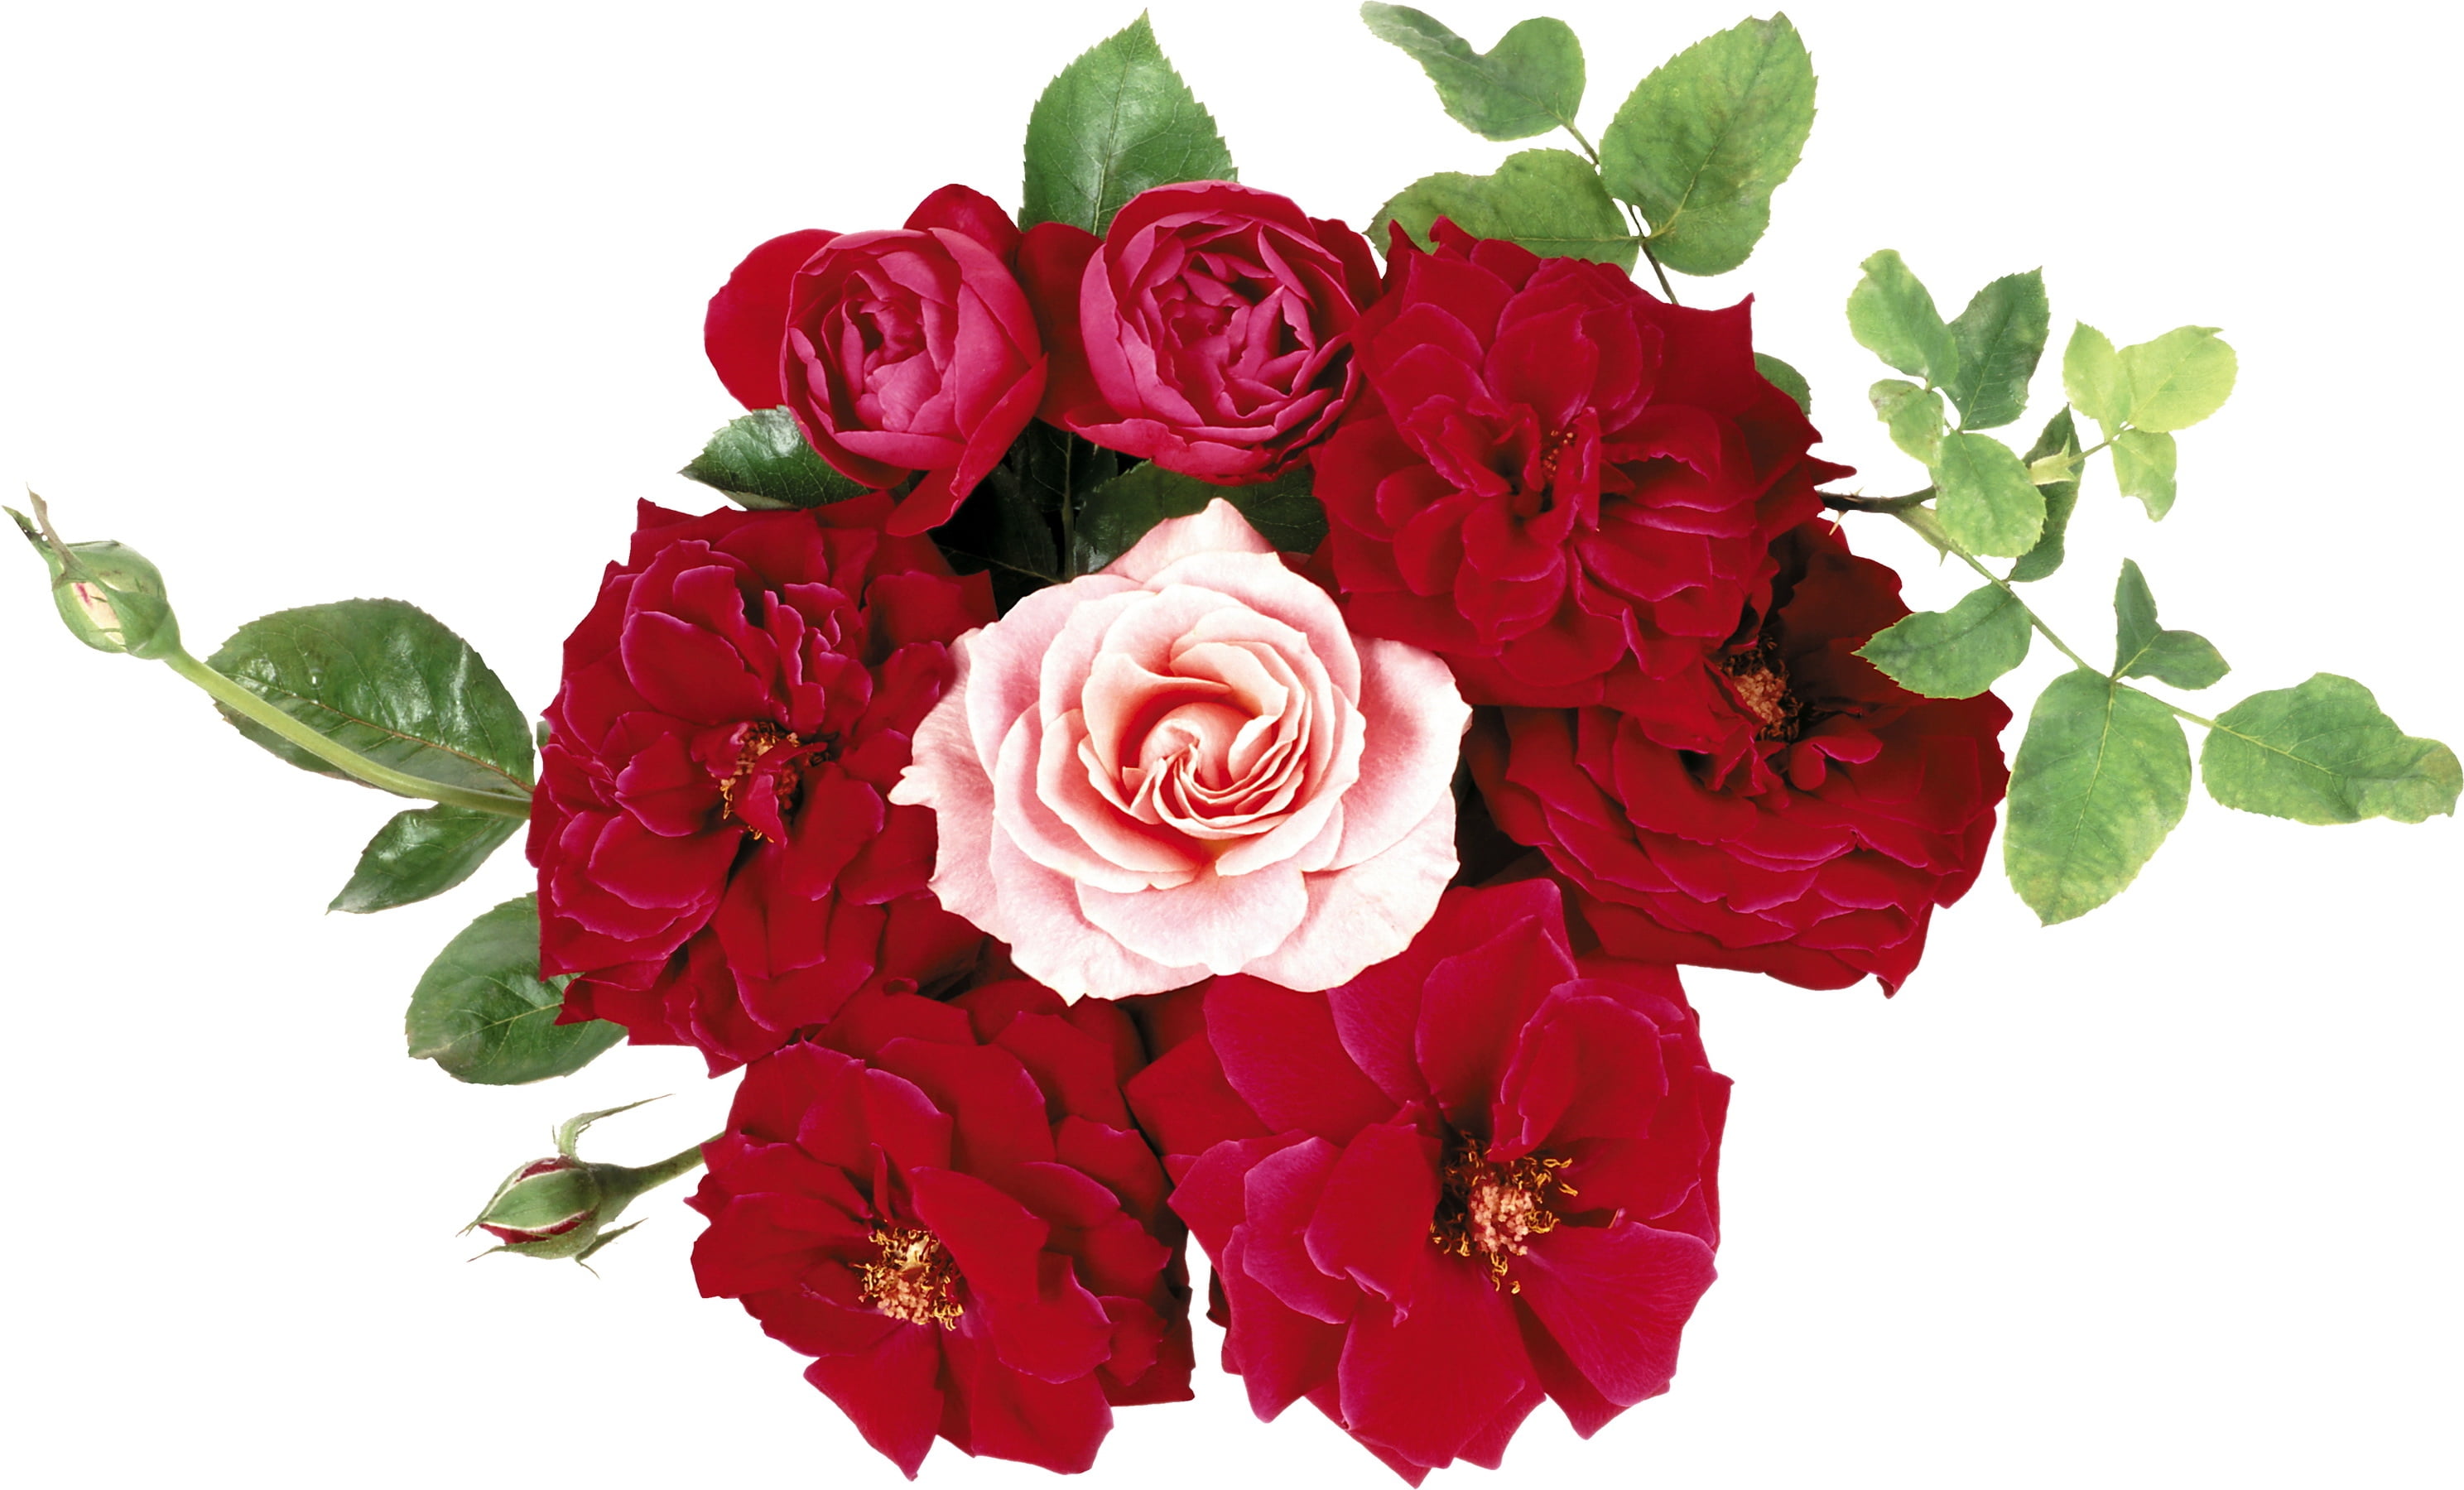 rose flower bouquet